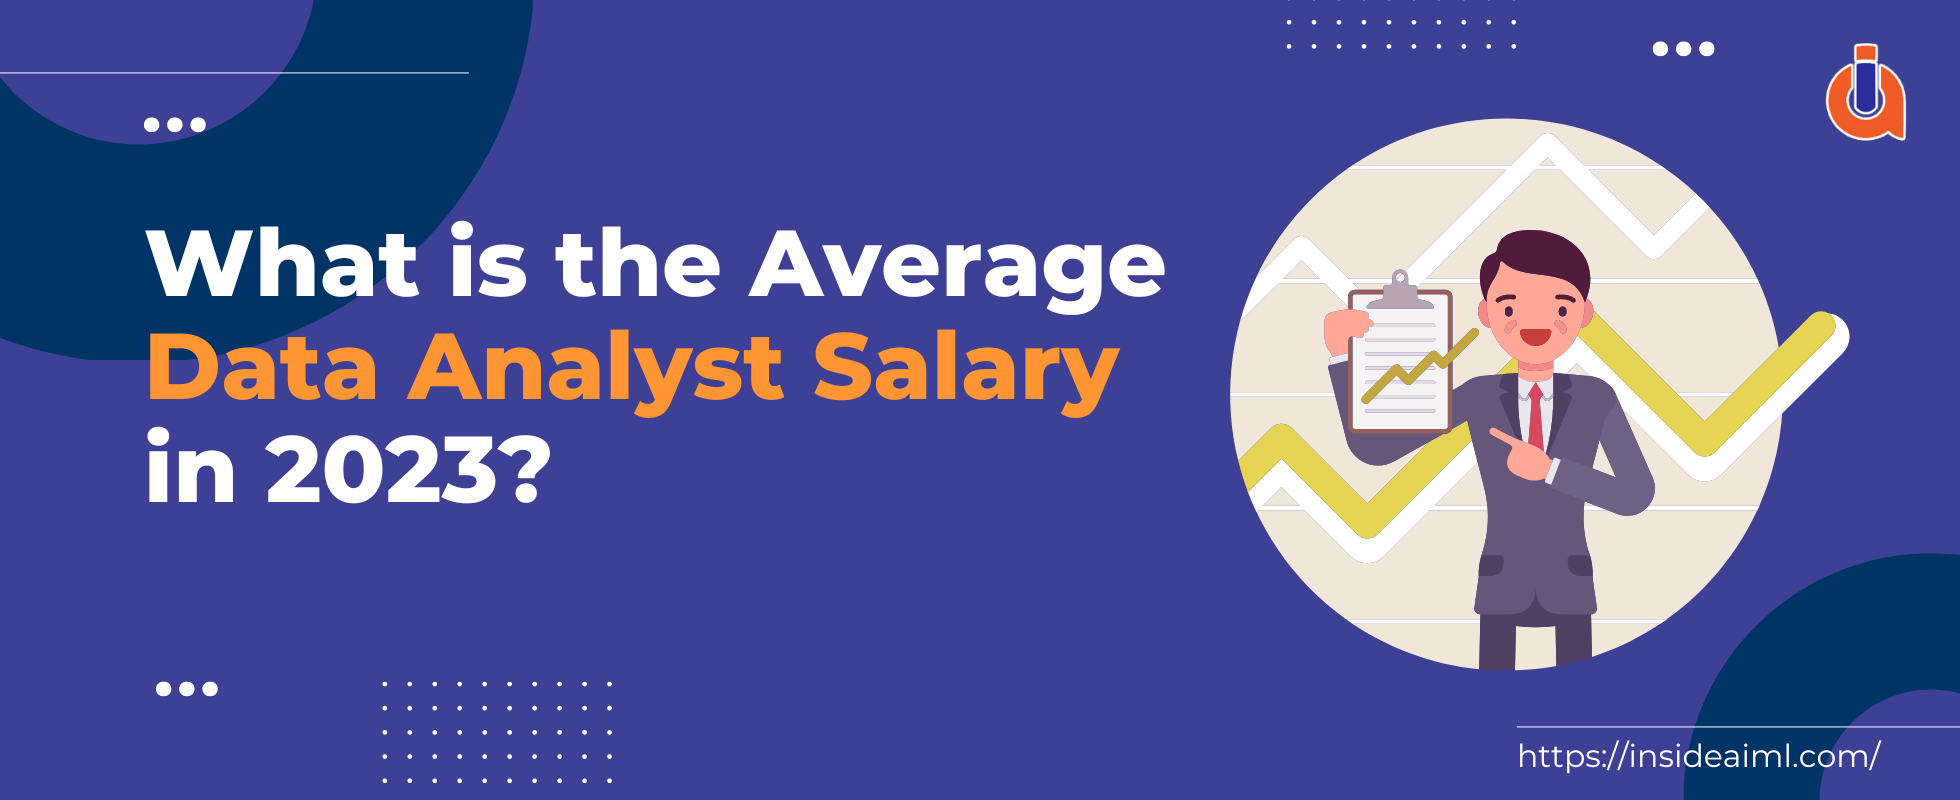 data analyst salary - blog